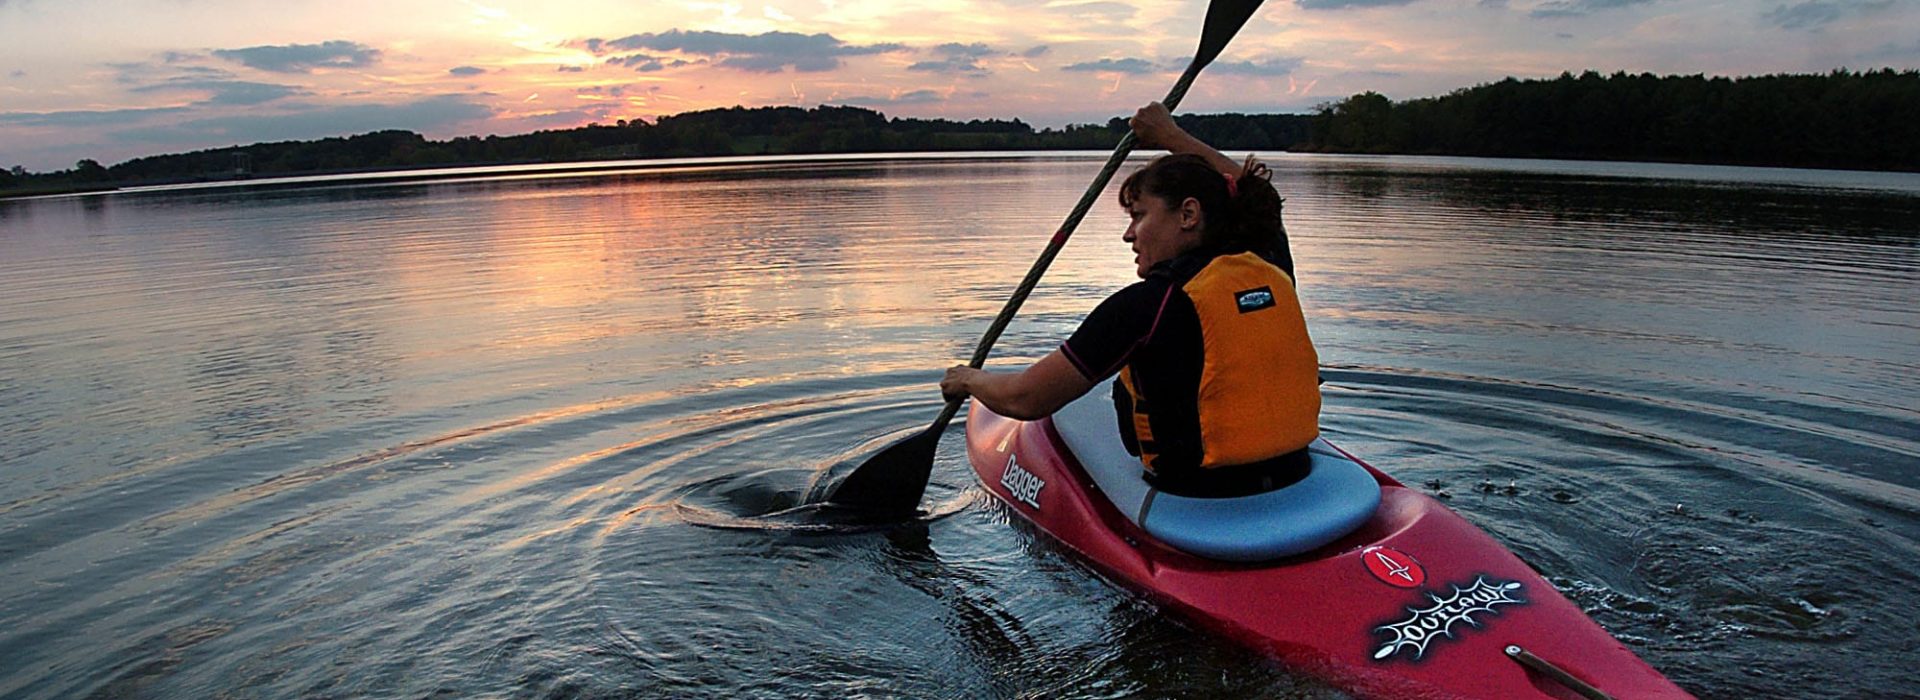 girl paddling a kayak on the river at sunset